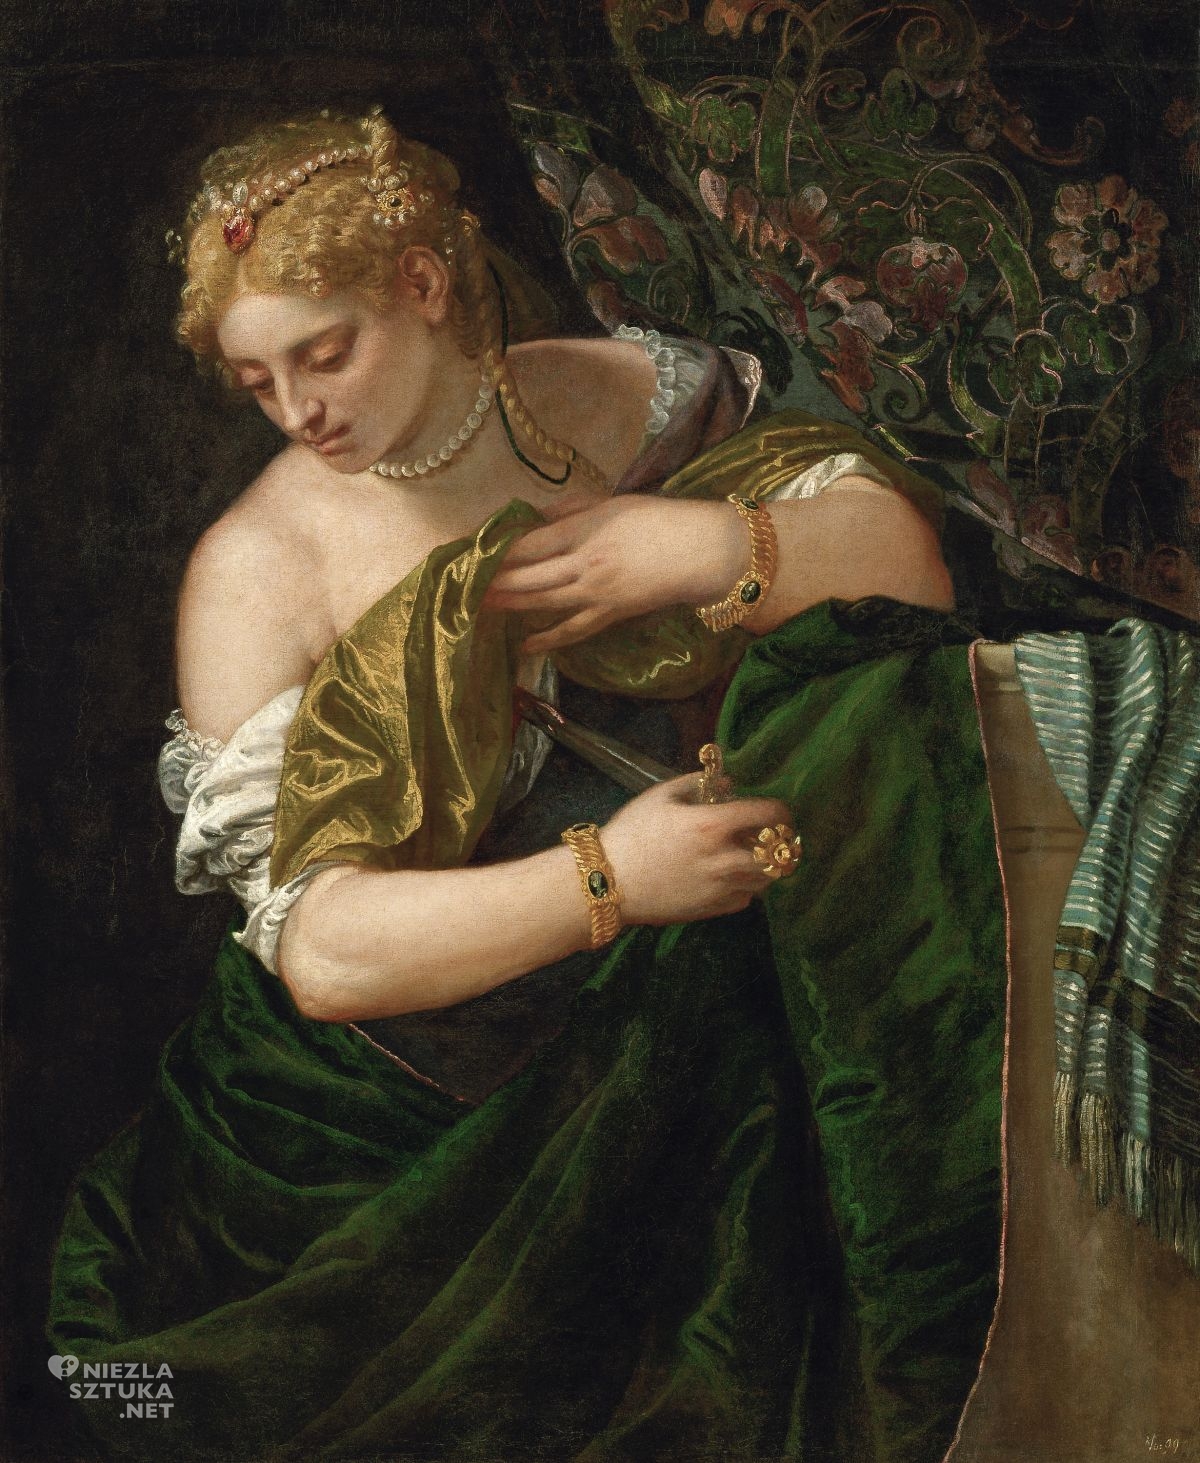 Paolo Veronese, Lukrecja, Kunsthistorisches, Wiedeń, niezła sztuka